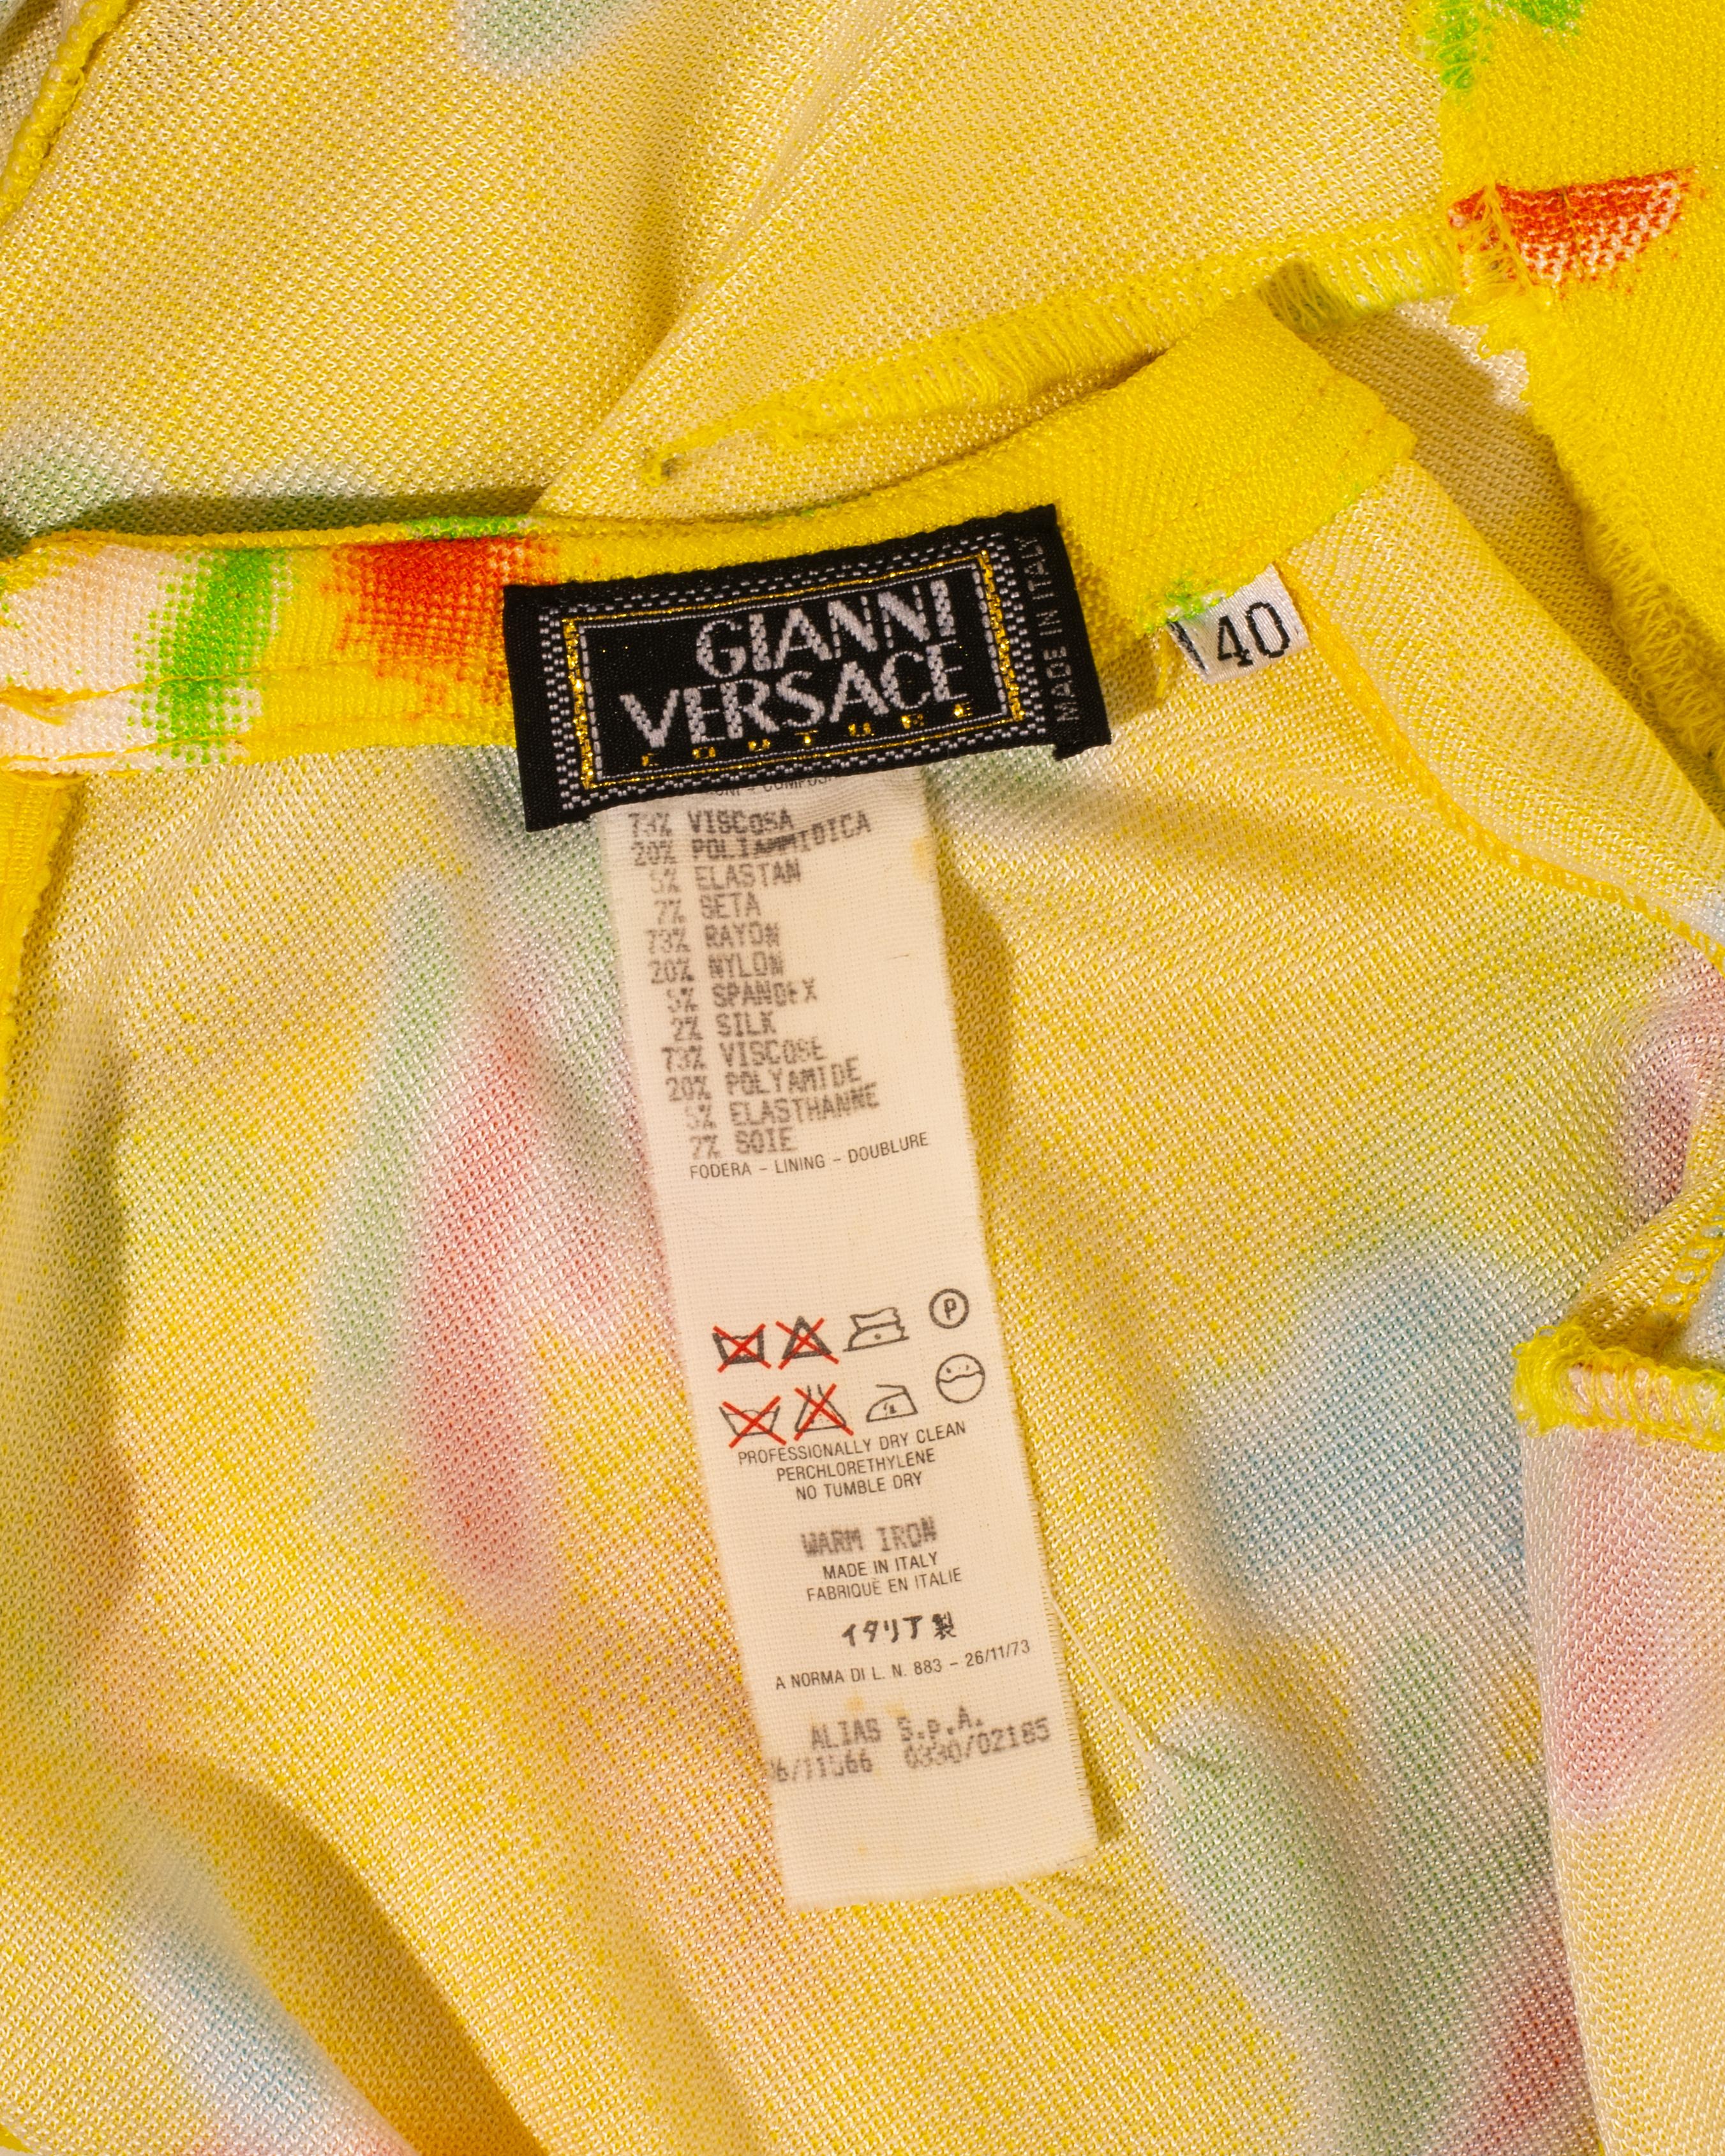 Gianni Versace yellow floral print jersey crop top and pants set, ss 1996 2